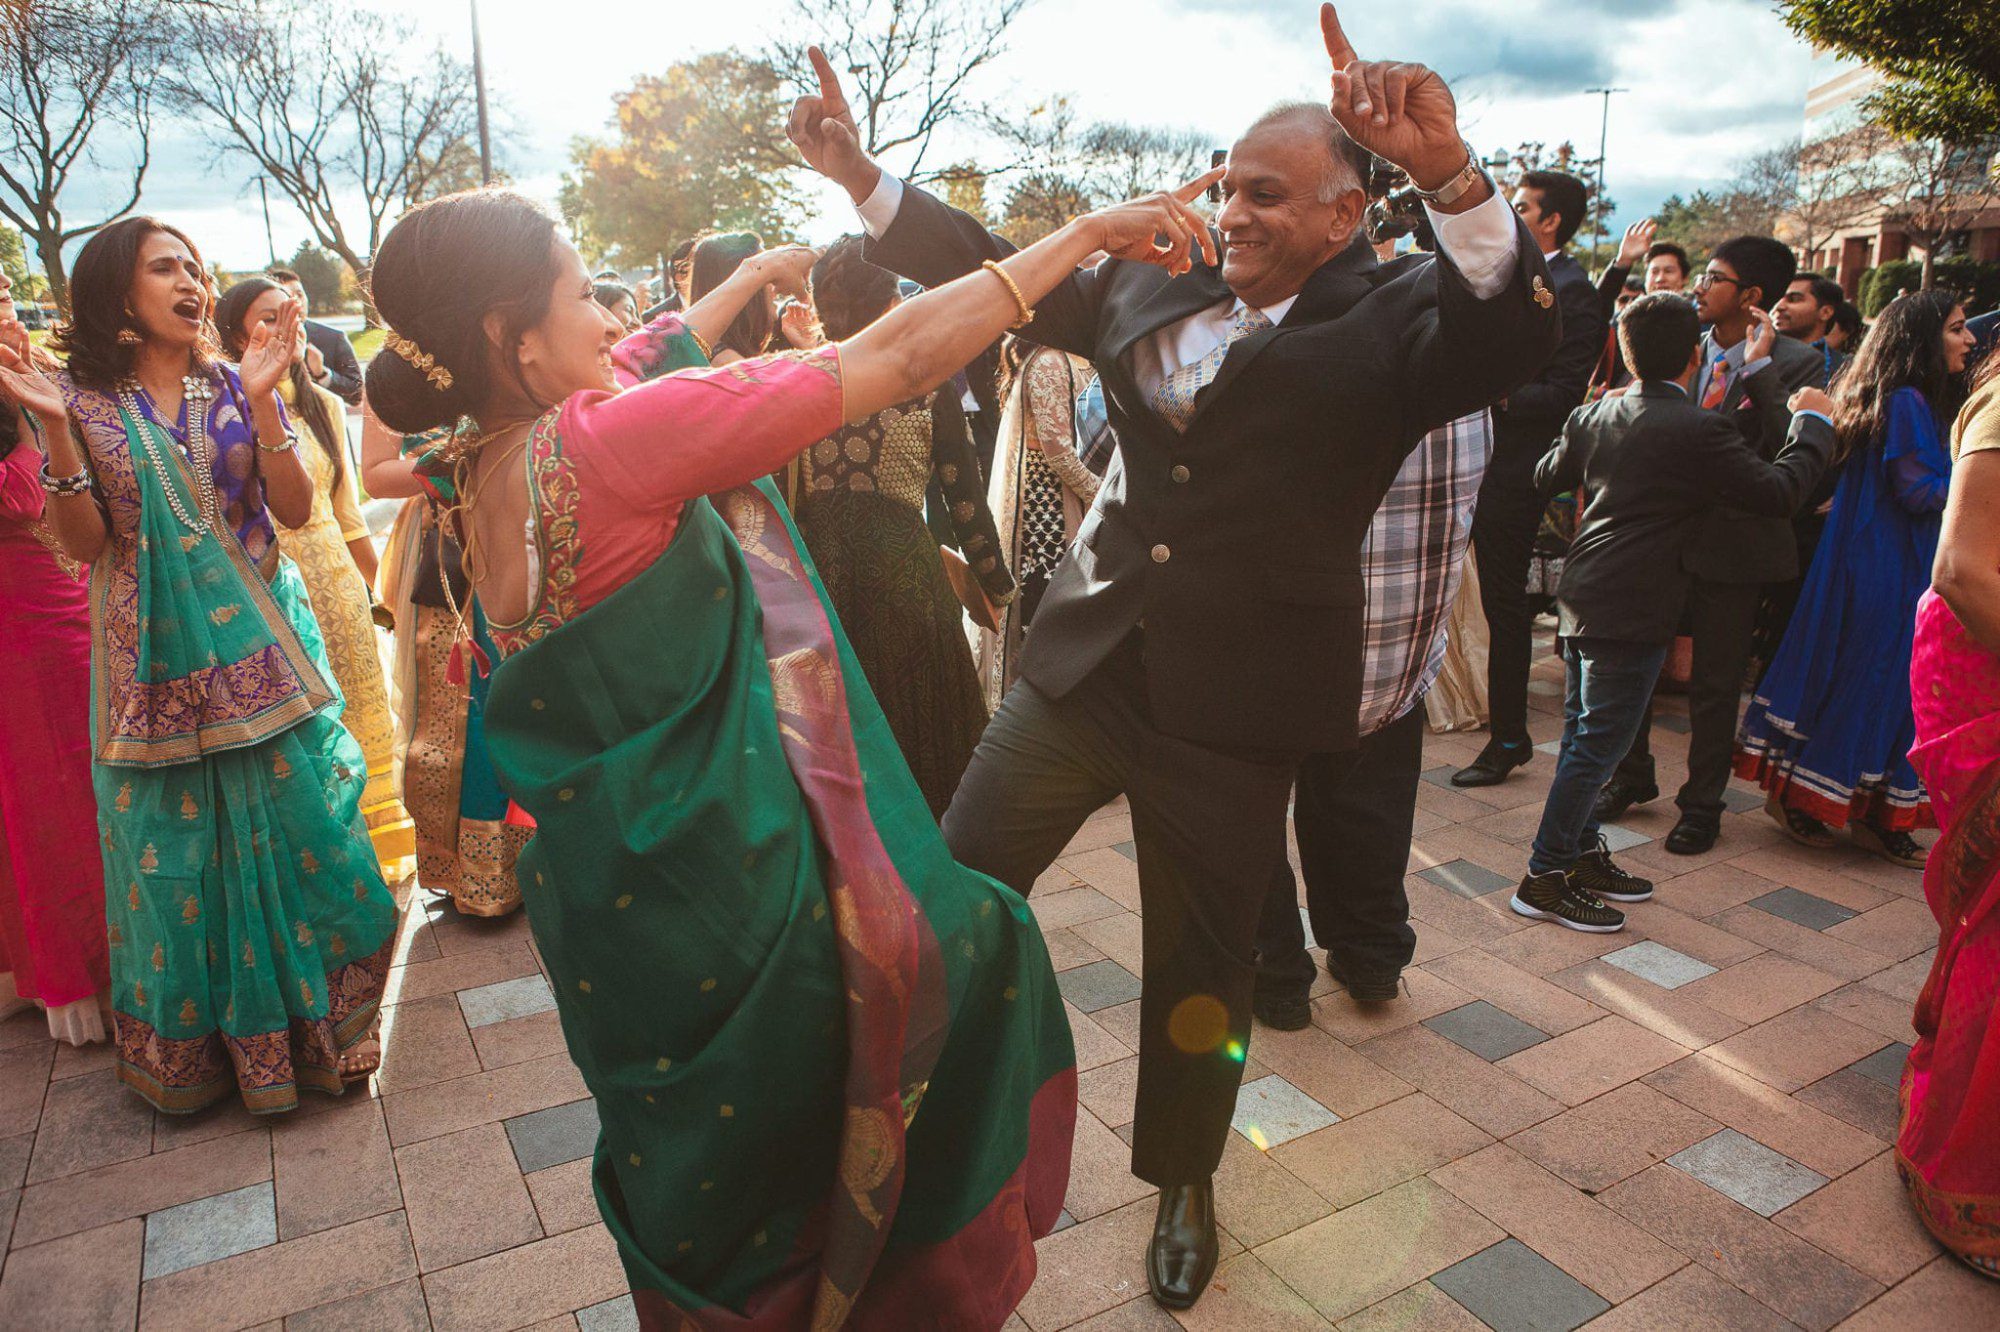 man and woman dancing during Indian wedding baraat